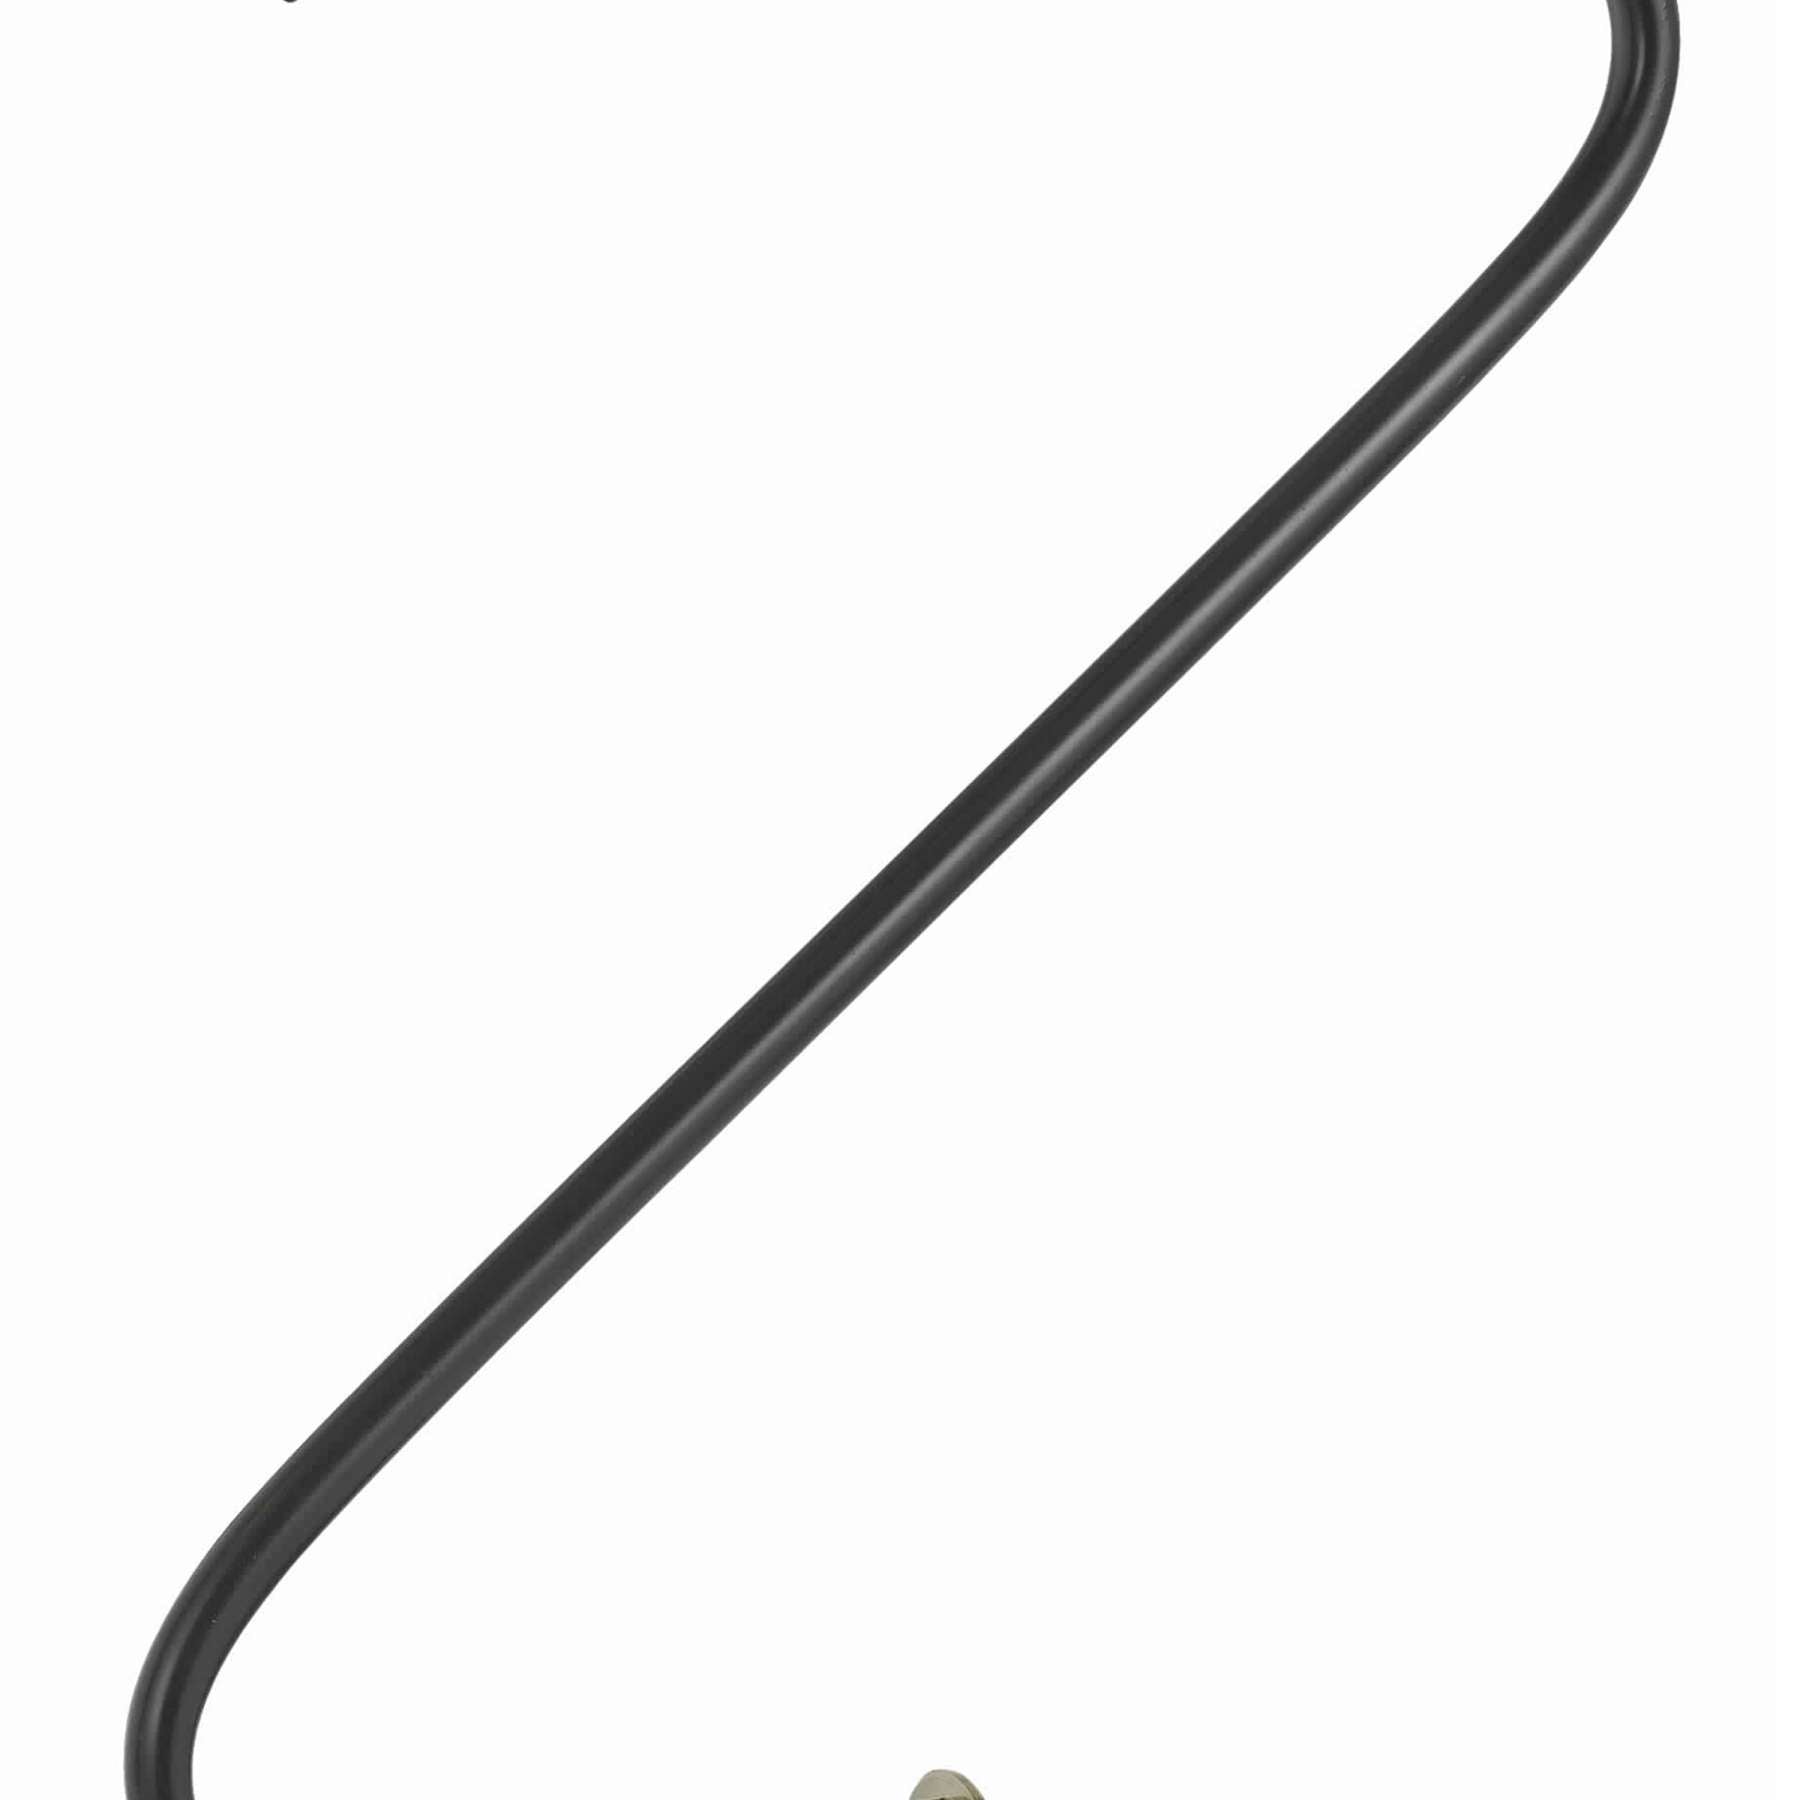 Benzara Adjustable Head Metal Desk Lamp With Curved Design Tubular Stand, Black By Benzara Desk Lamps BM224798